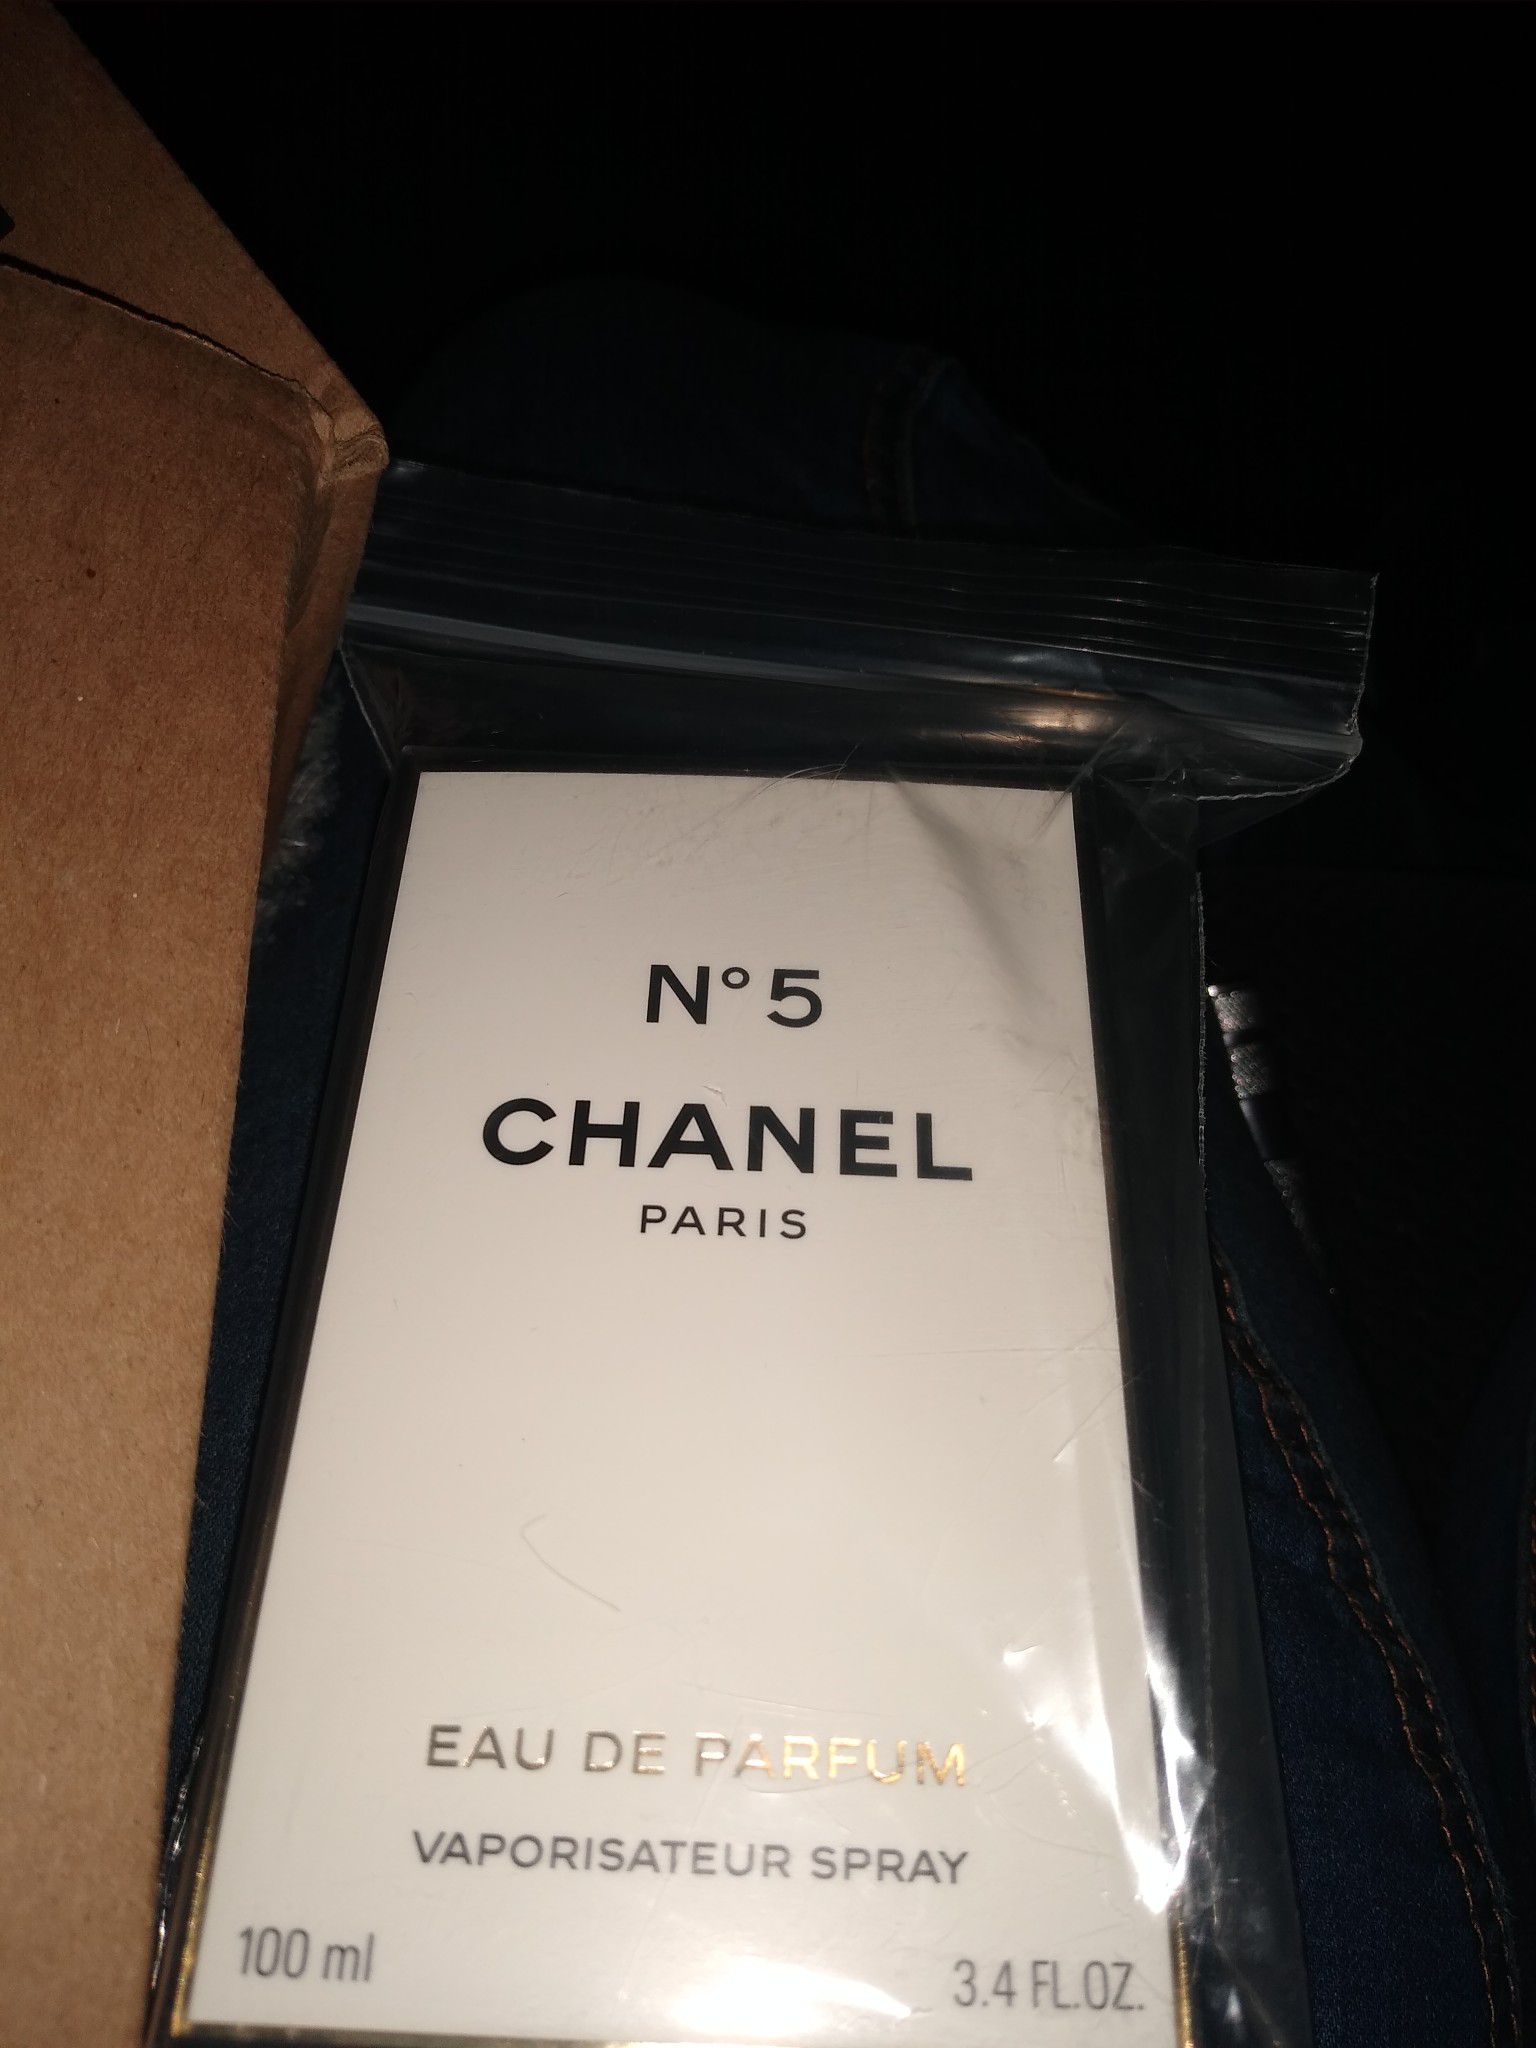 N5 Chanel Paris perfume for women